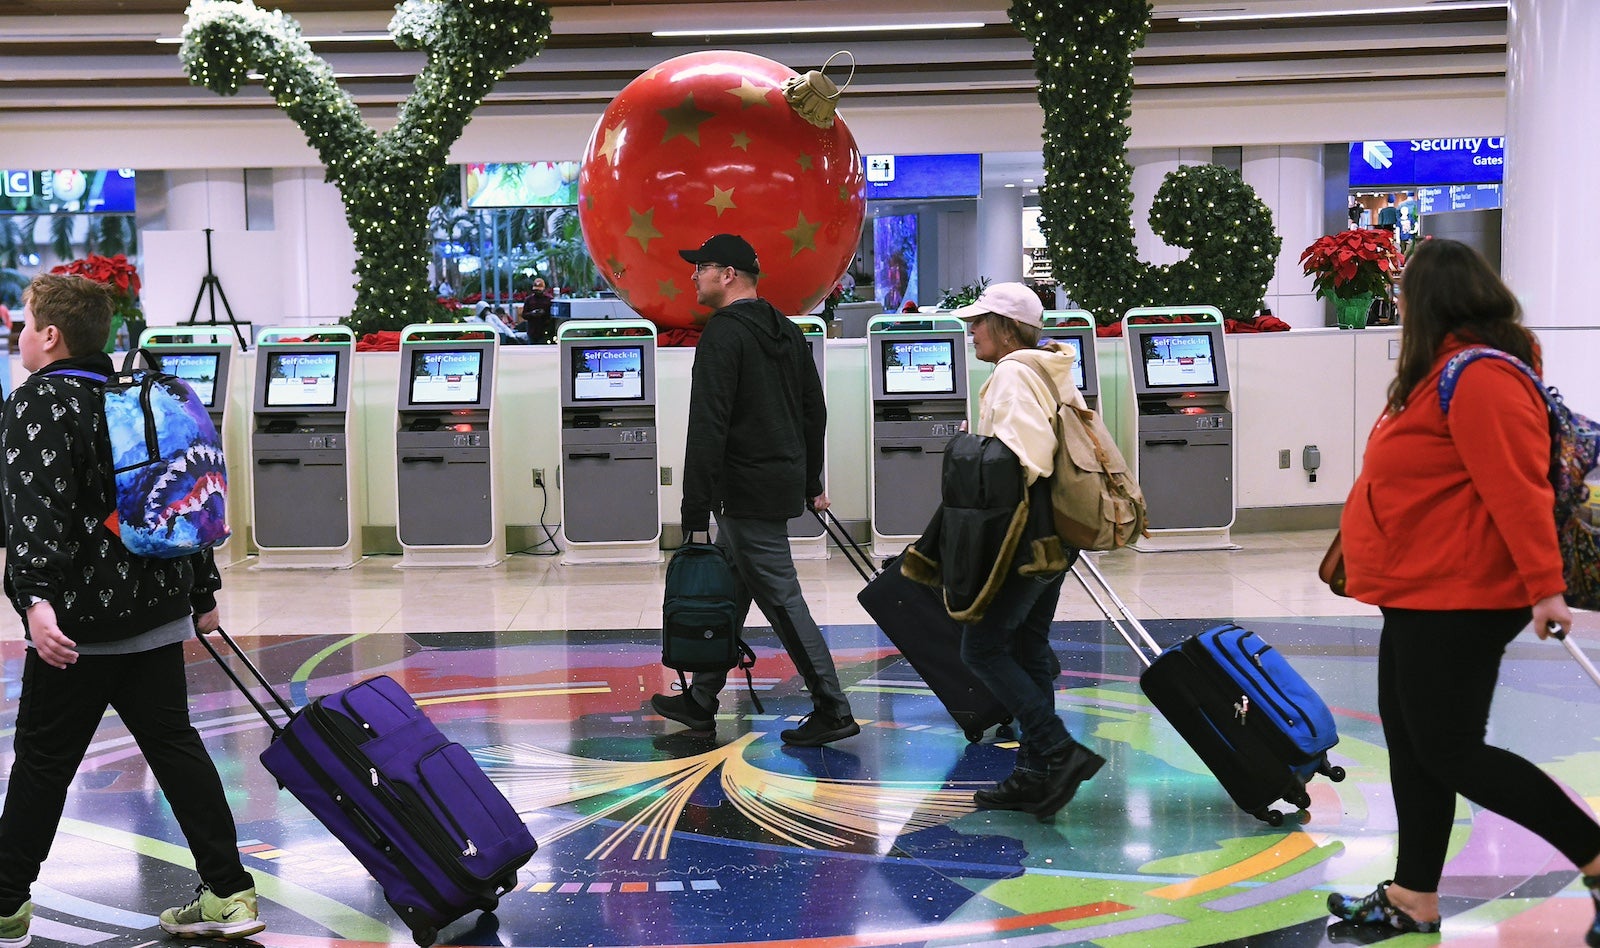 Passengers walking through Orlando airport during the holidays